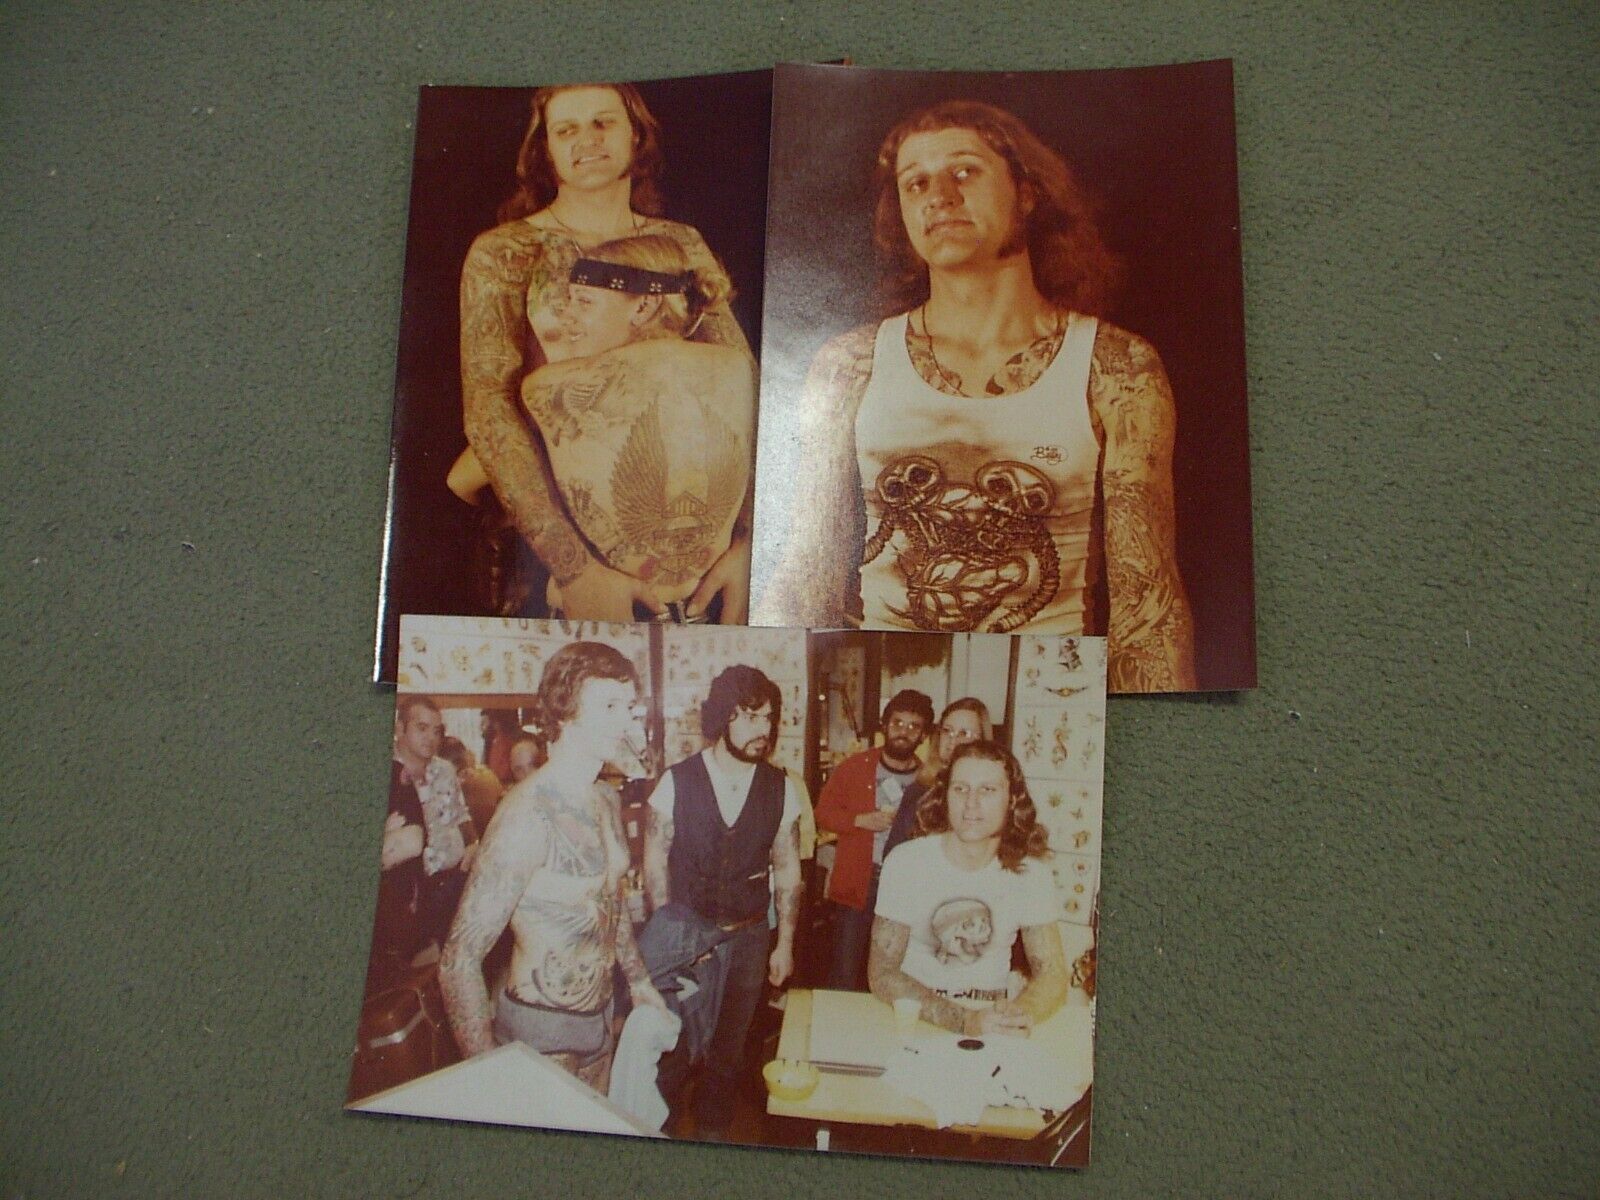 1980 World Tattoo Convention tattooist original photos, Lyle Tuttle, lot of 3